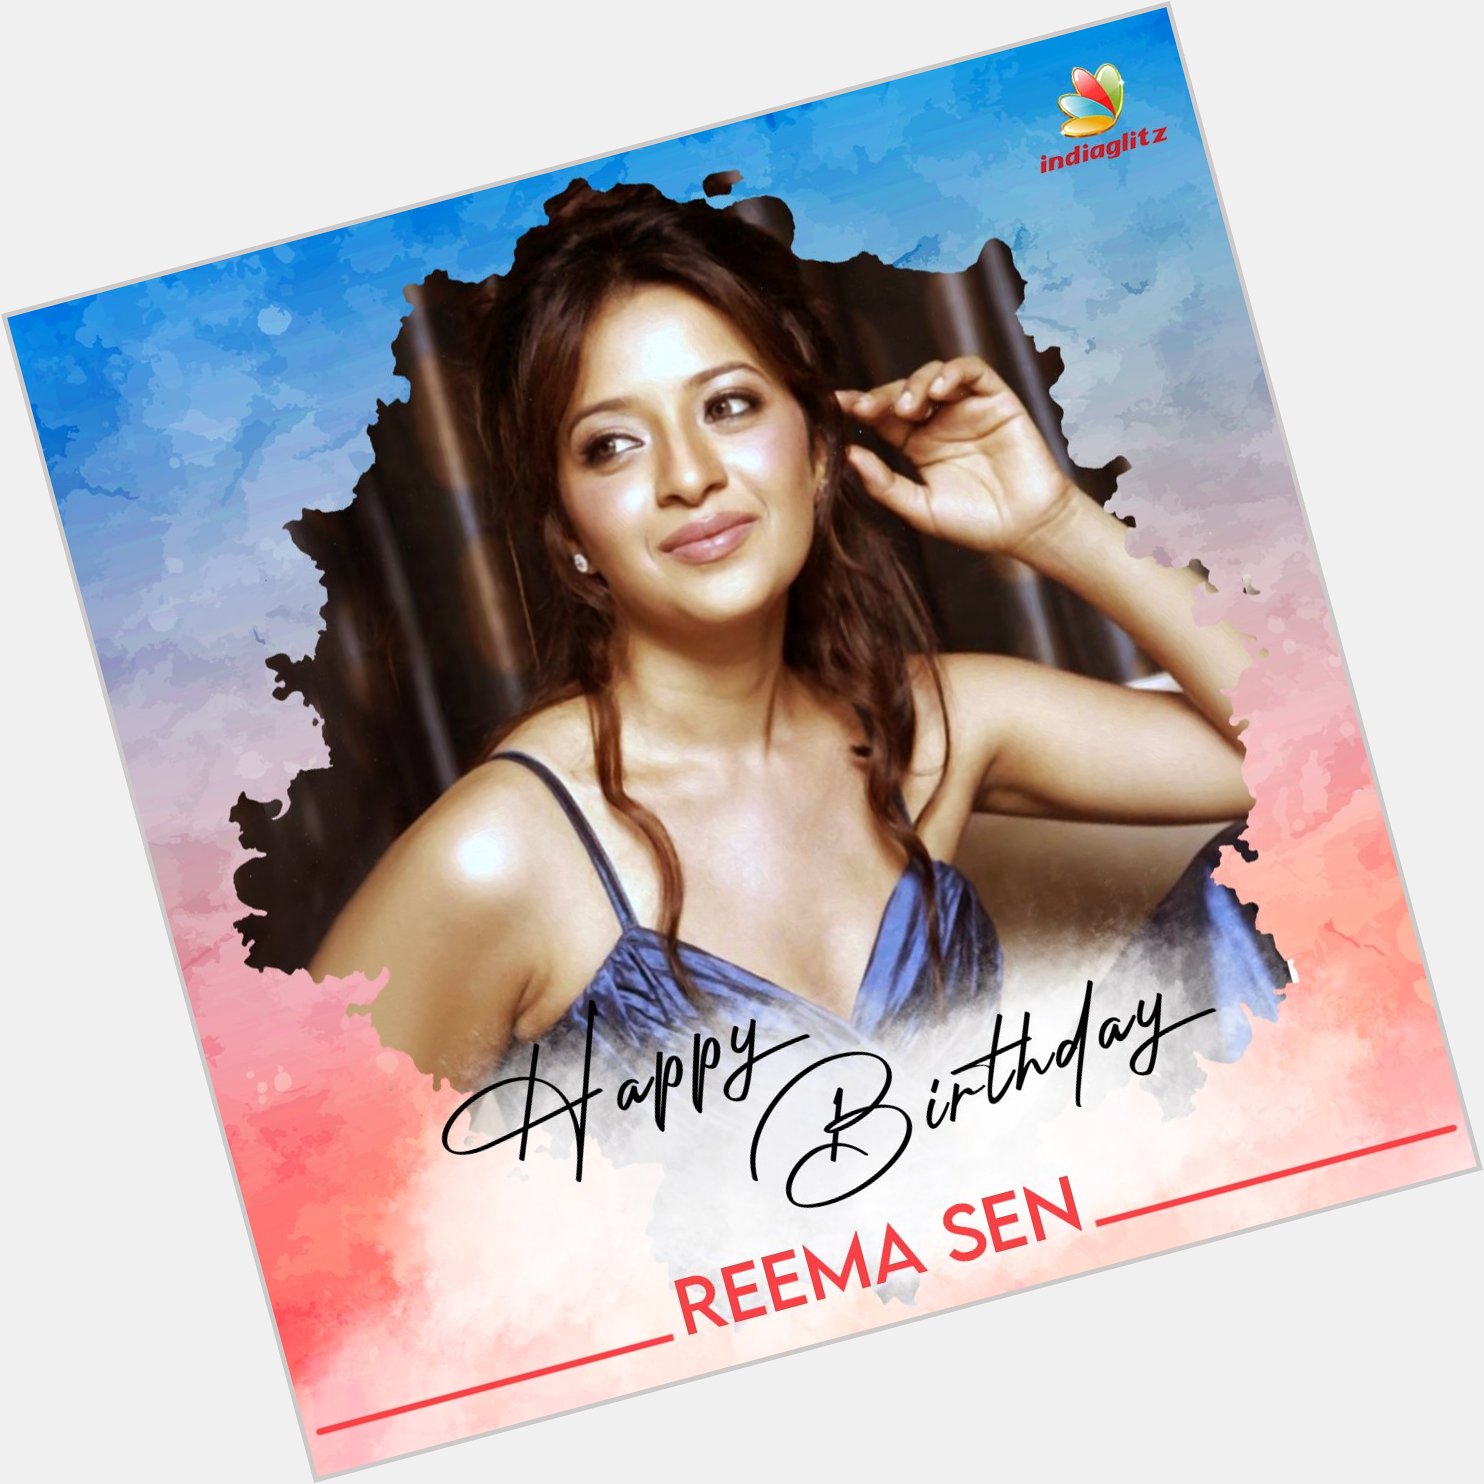 Wishing Actress Reema Sen a Very Happy Birthday   